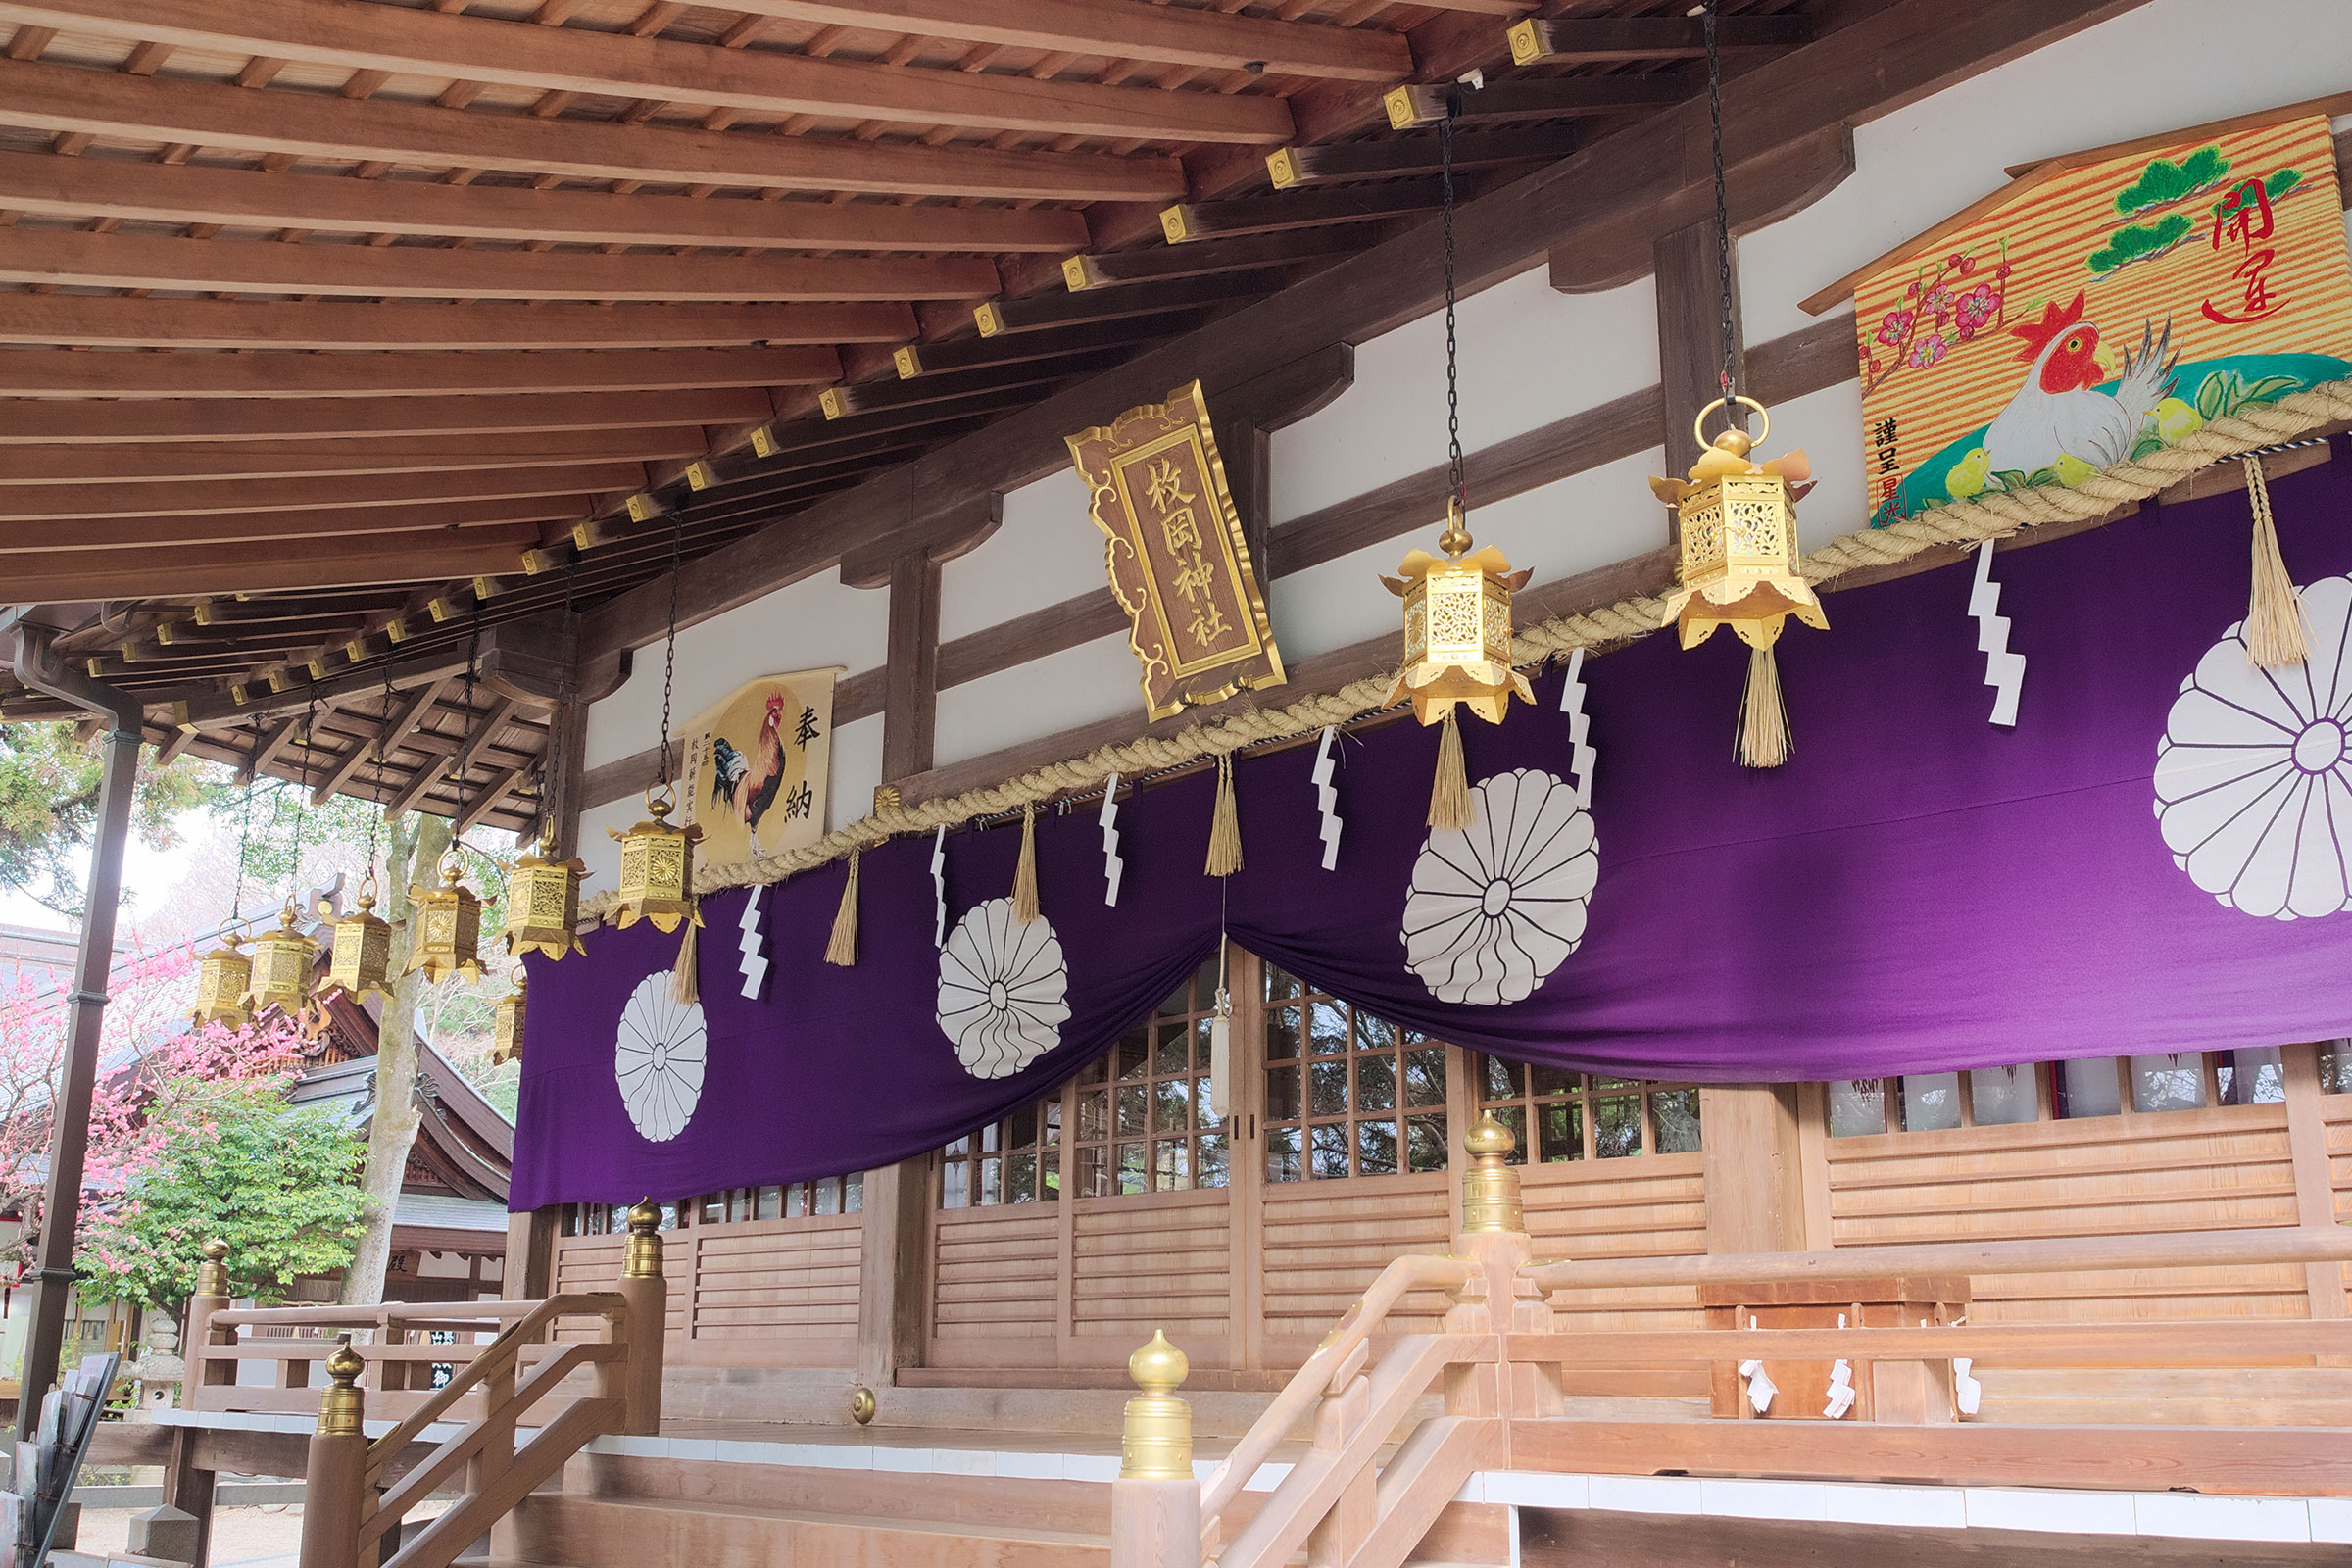 Hiraoka jinjya shrine located in Higashiosaka Osaka Japan